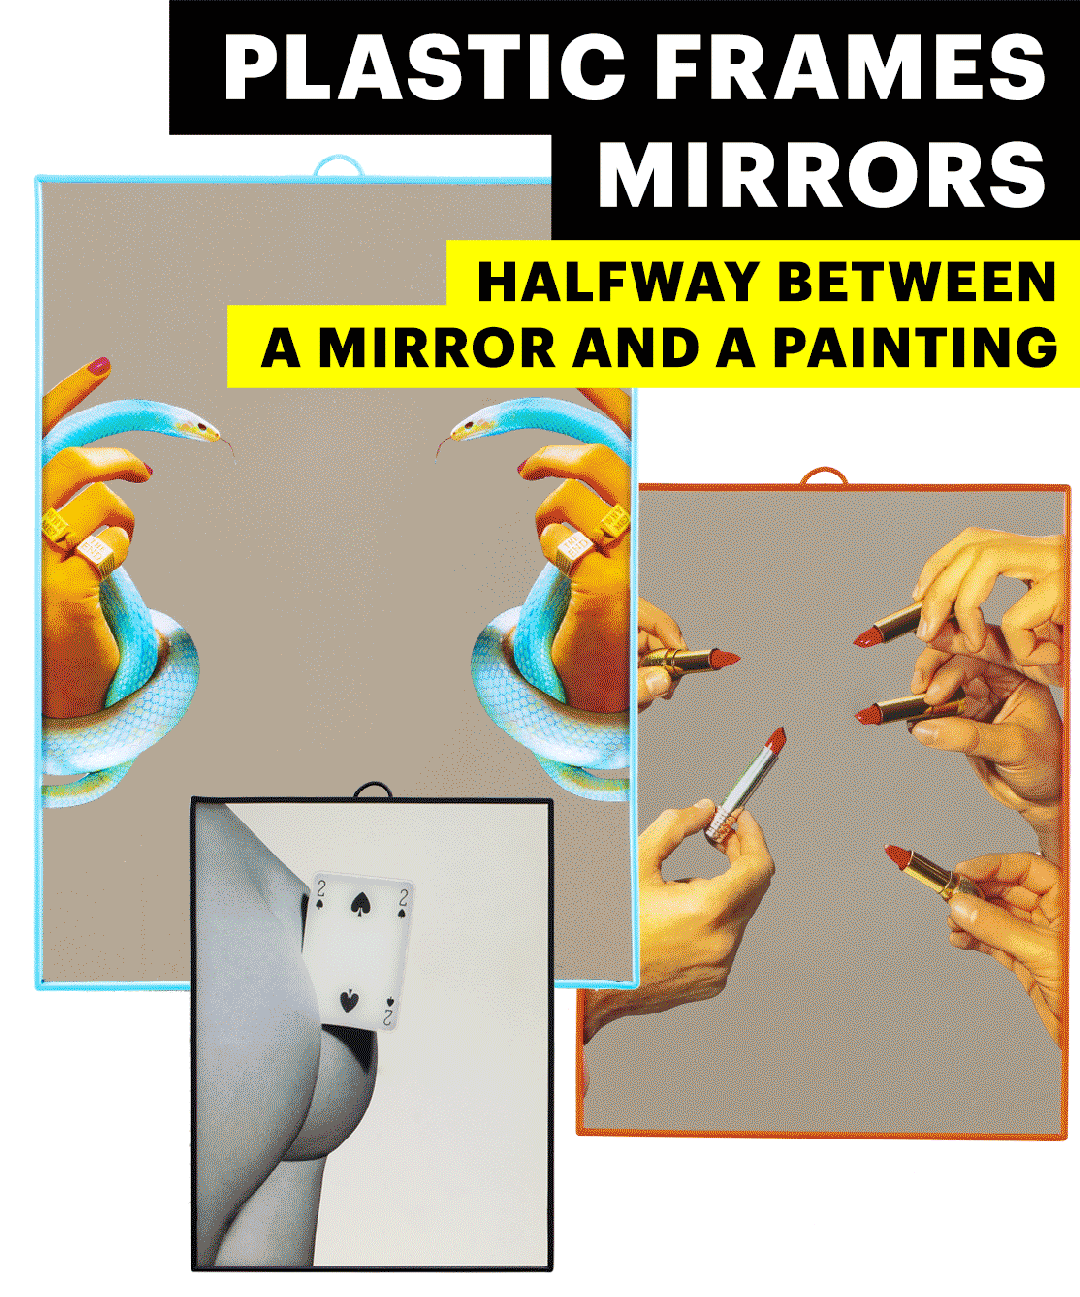 mirrors_plastic2